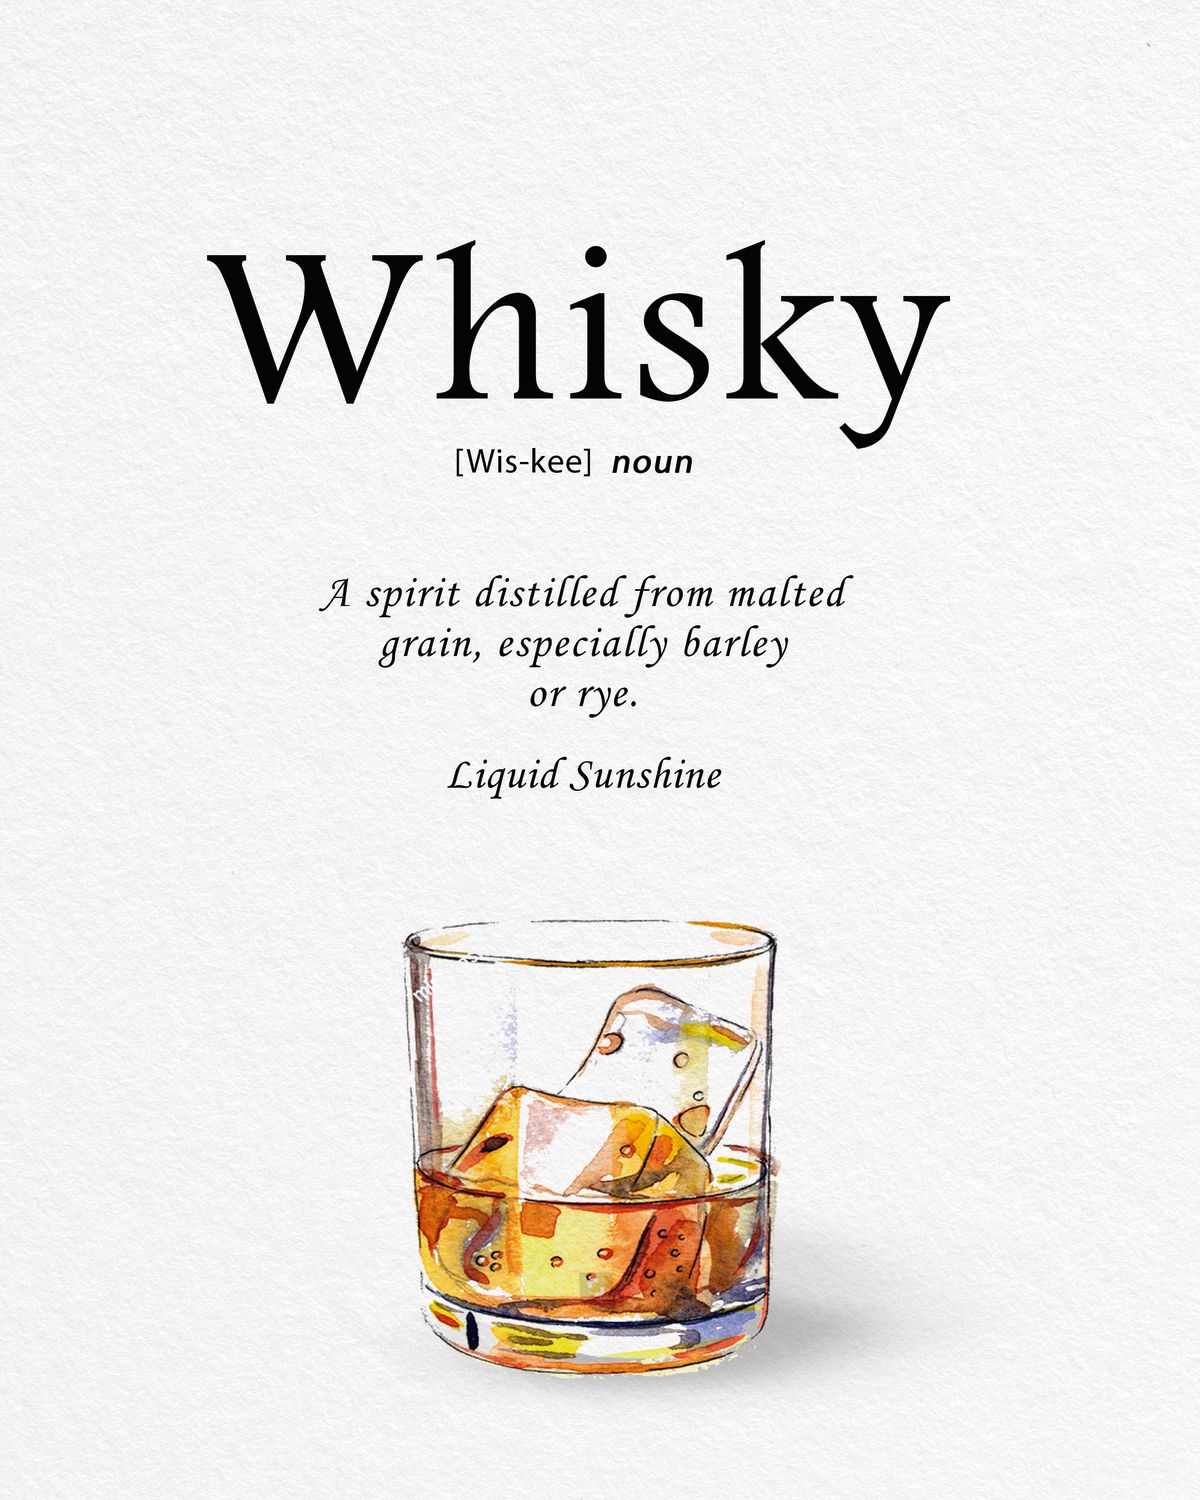 Whiskey Definition